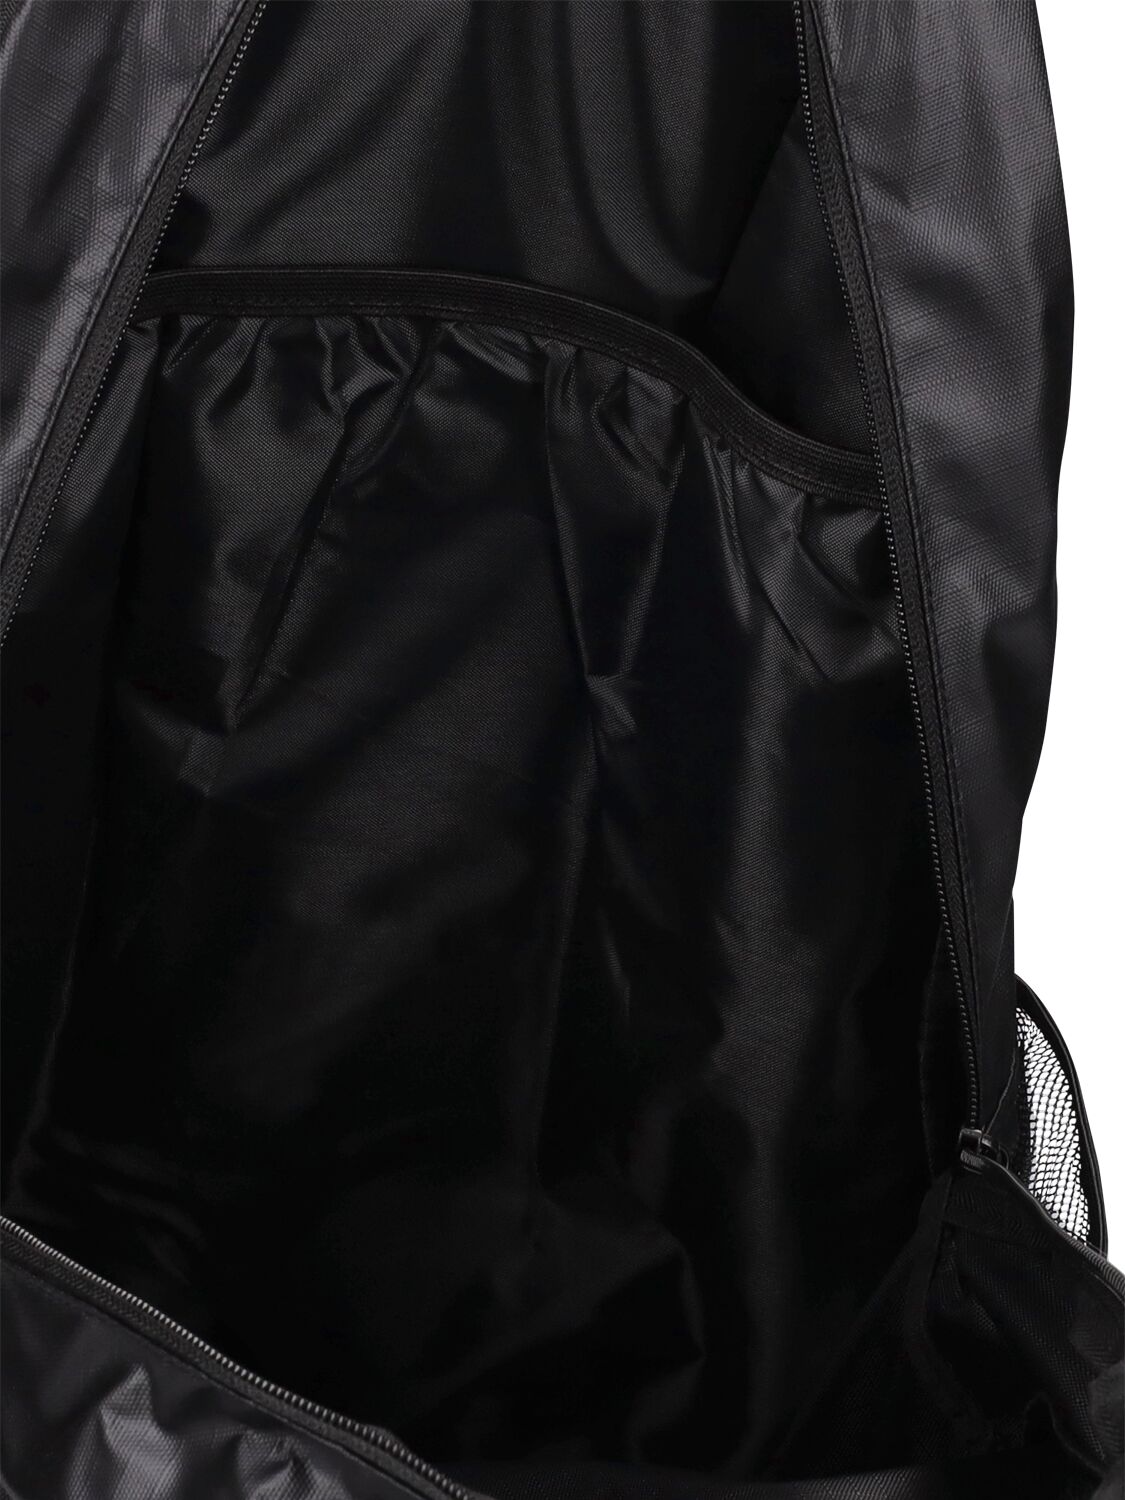 backpack New Era Contemporary Delaware MLB New York Yankees - Black/Black 